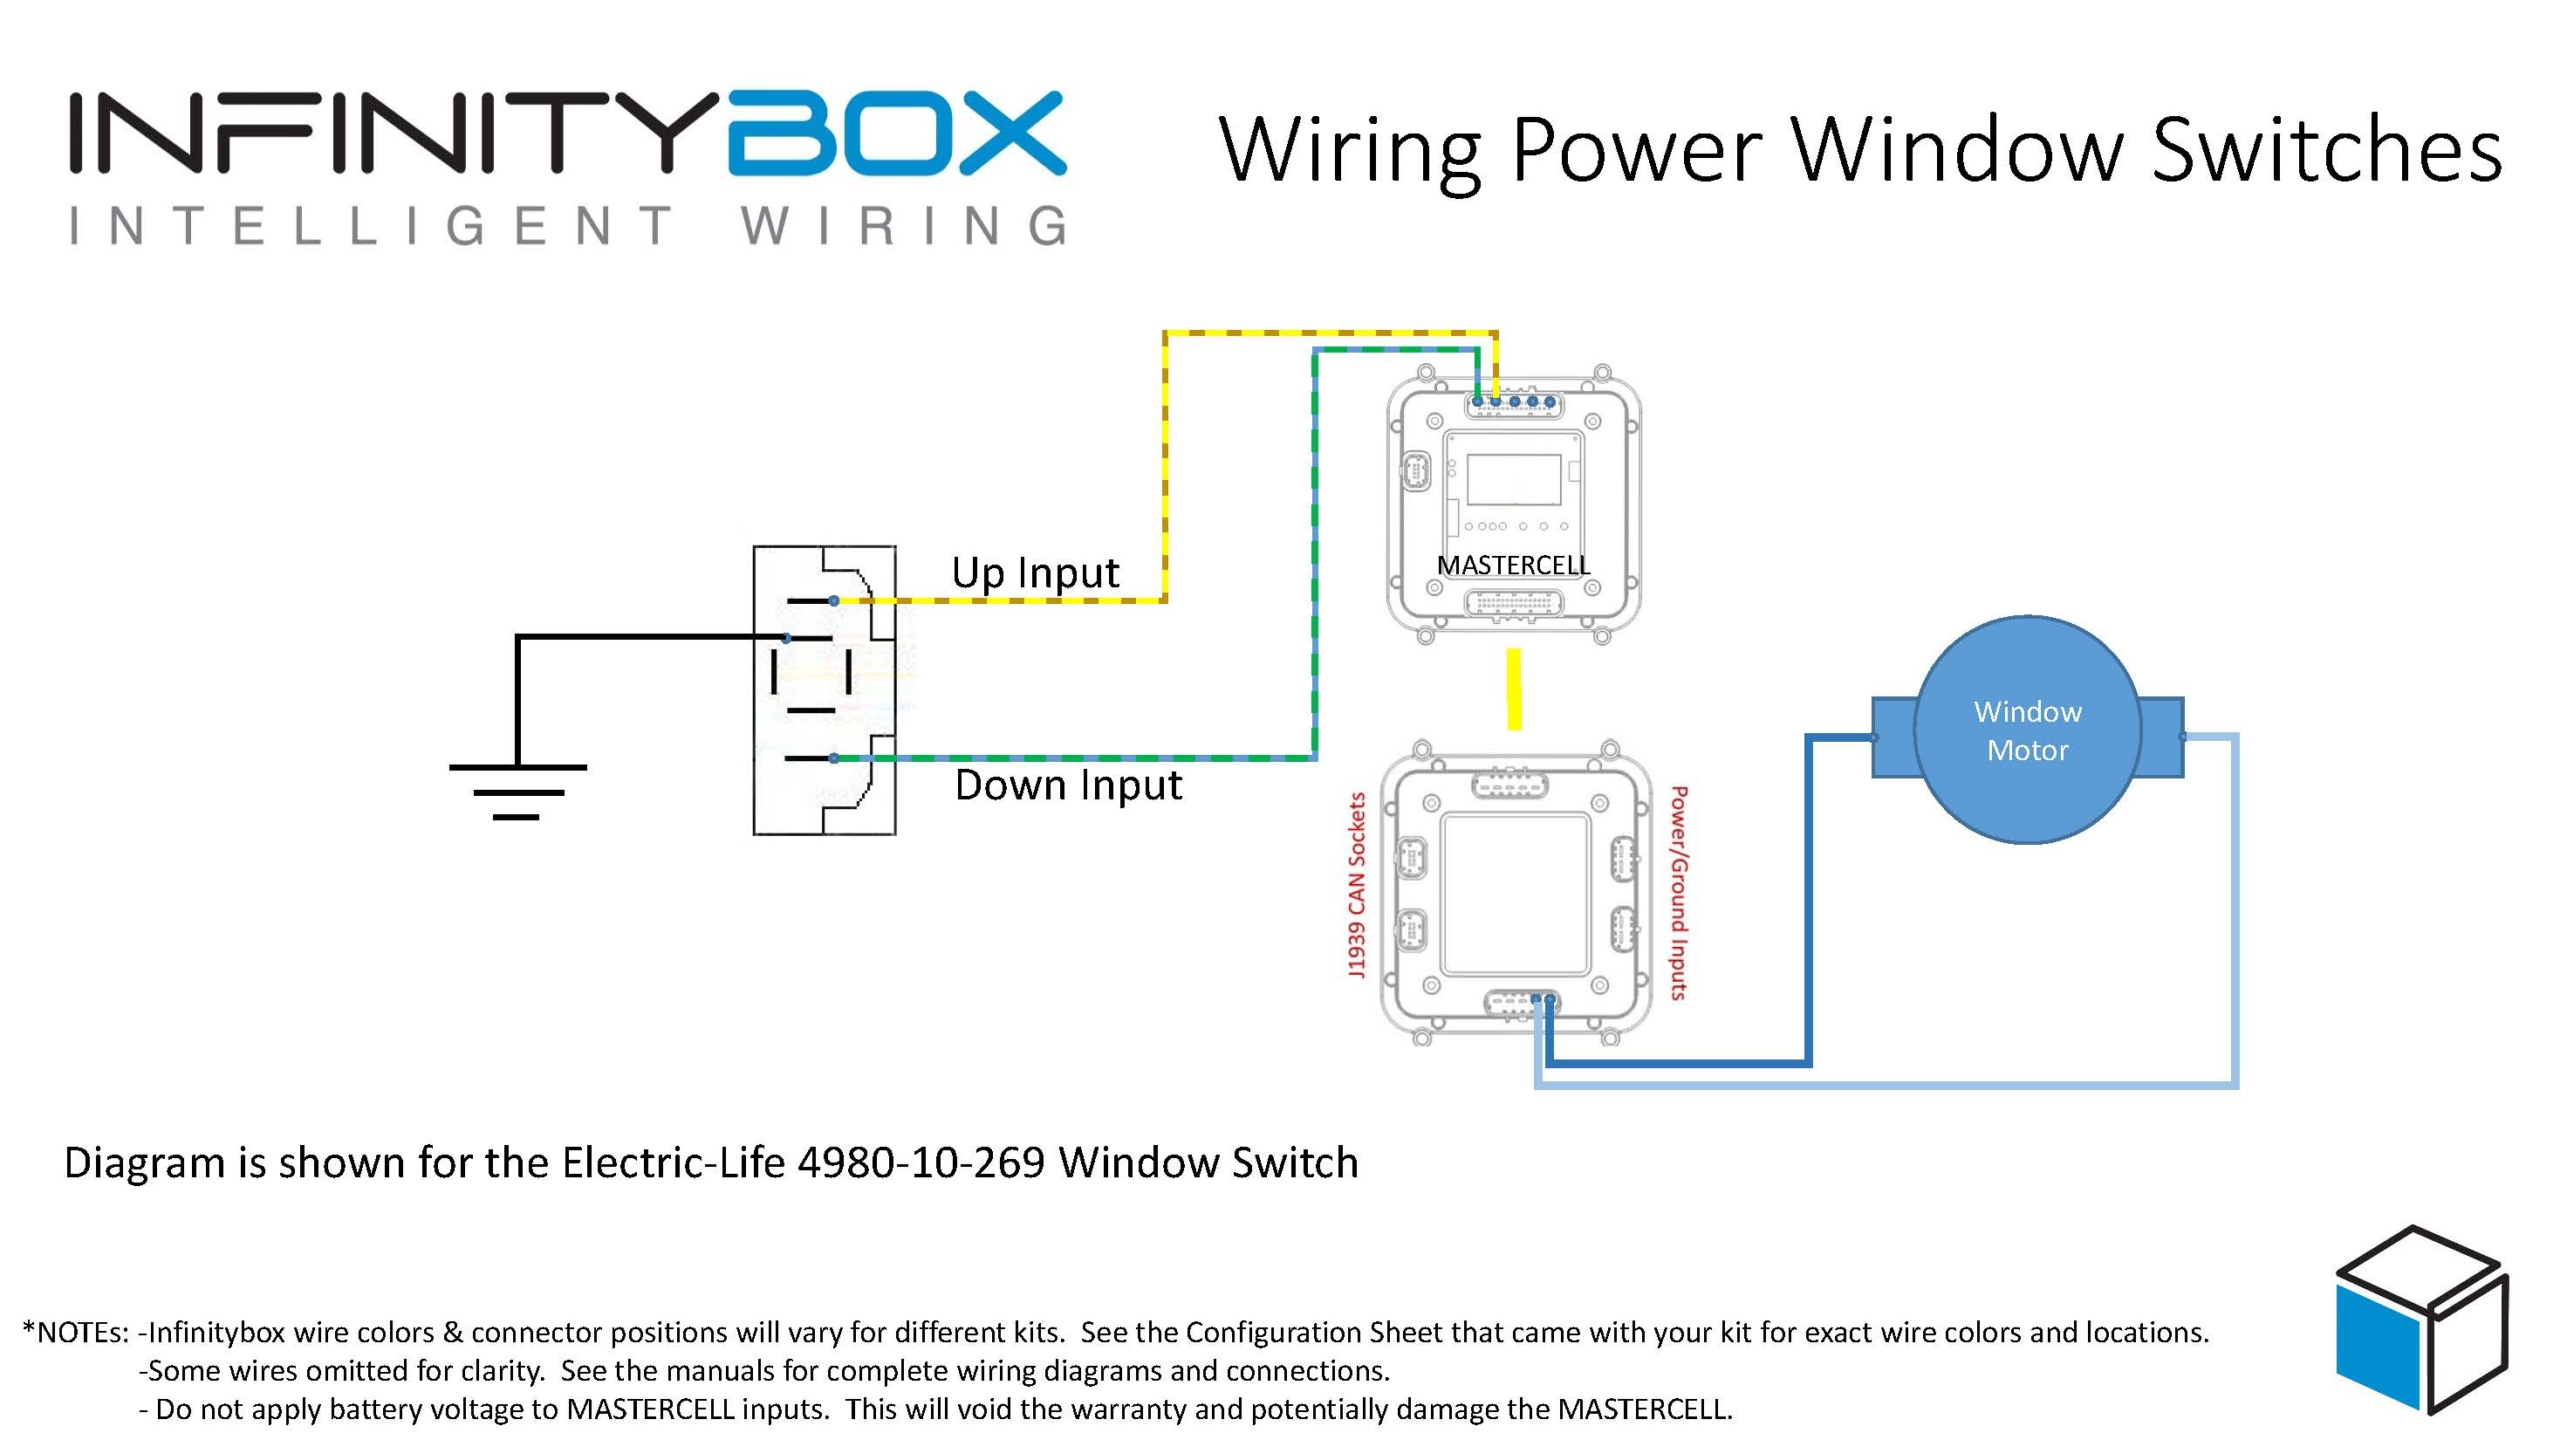 Wiring Power Window Switches Infinitybox